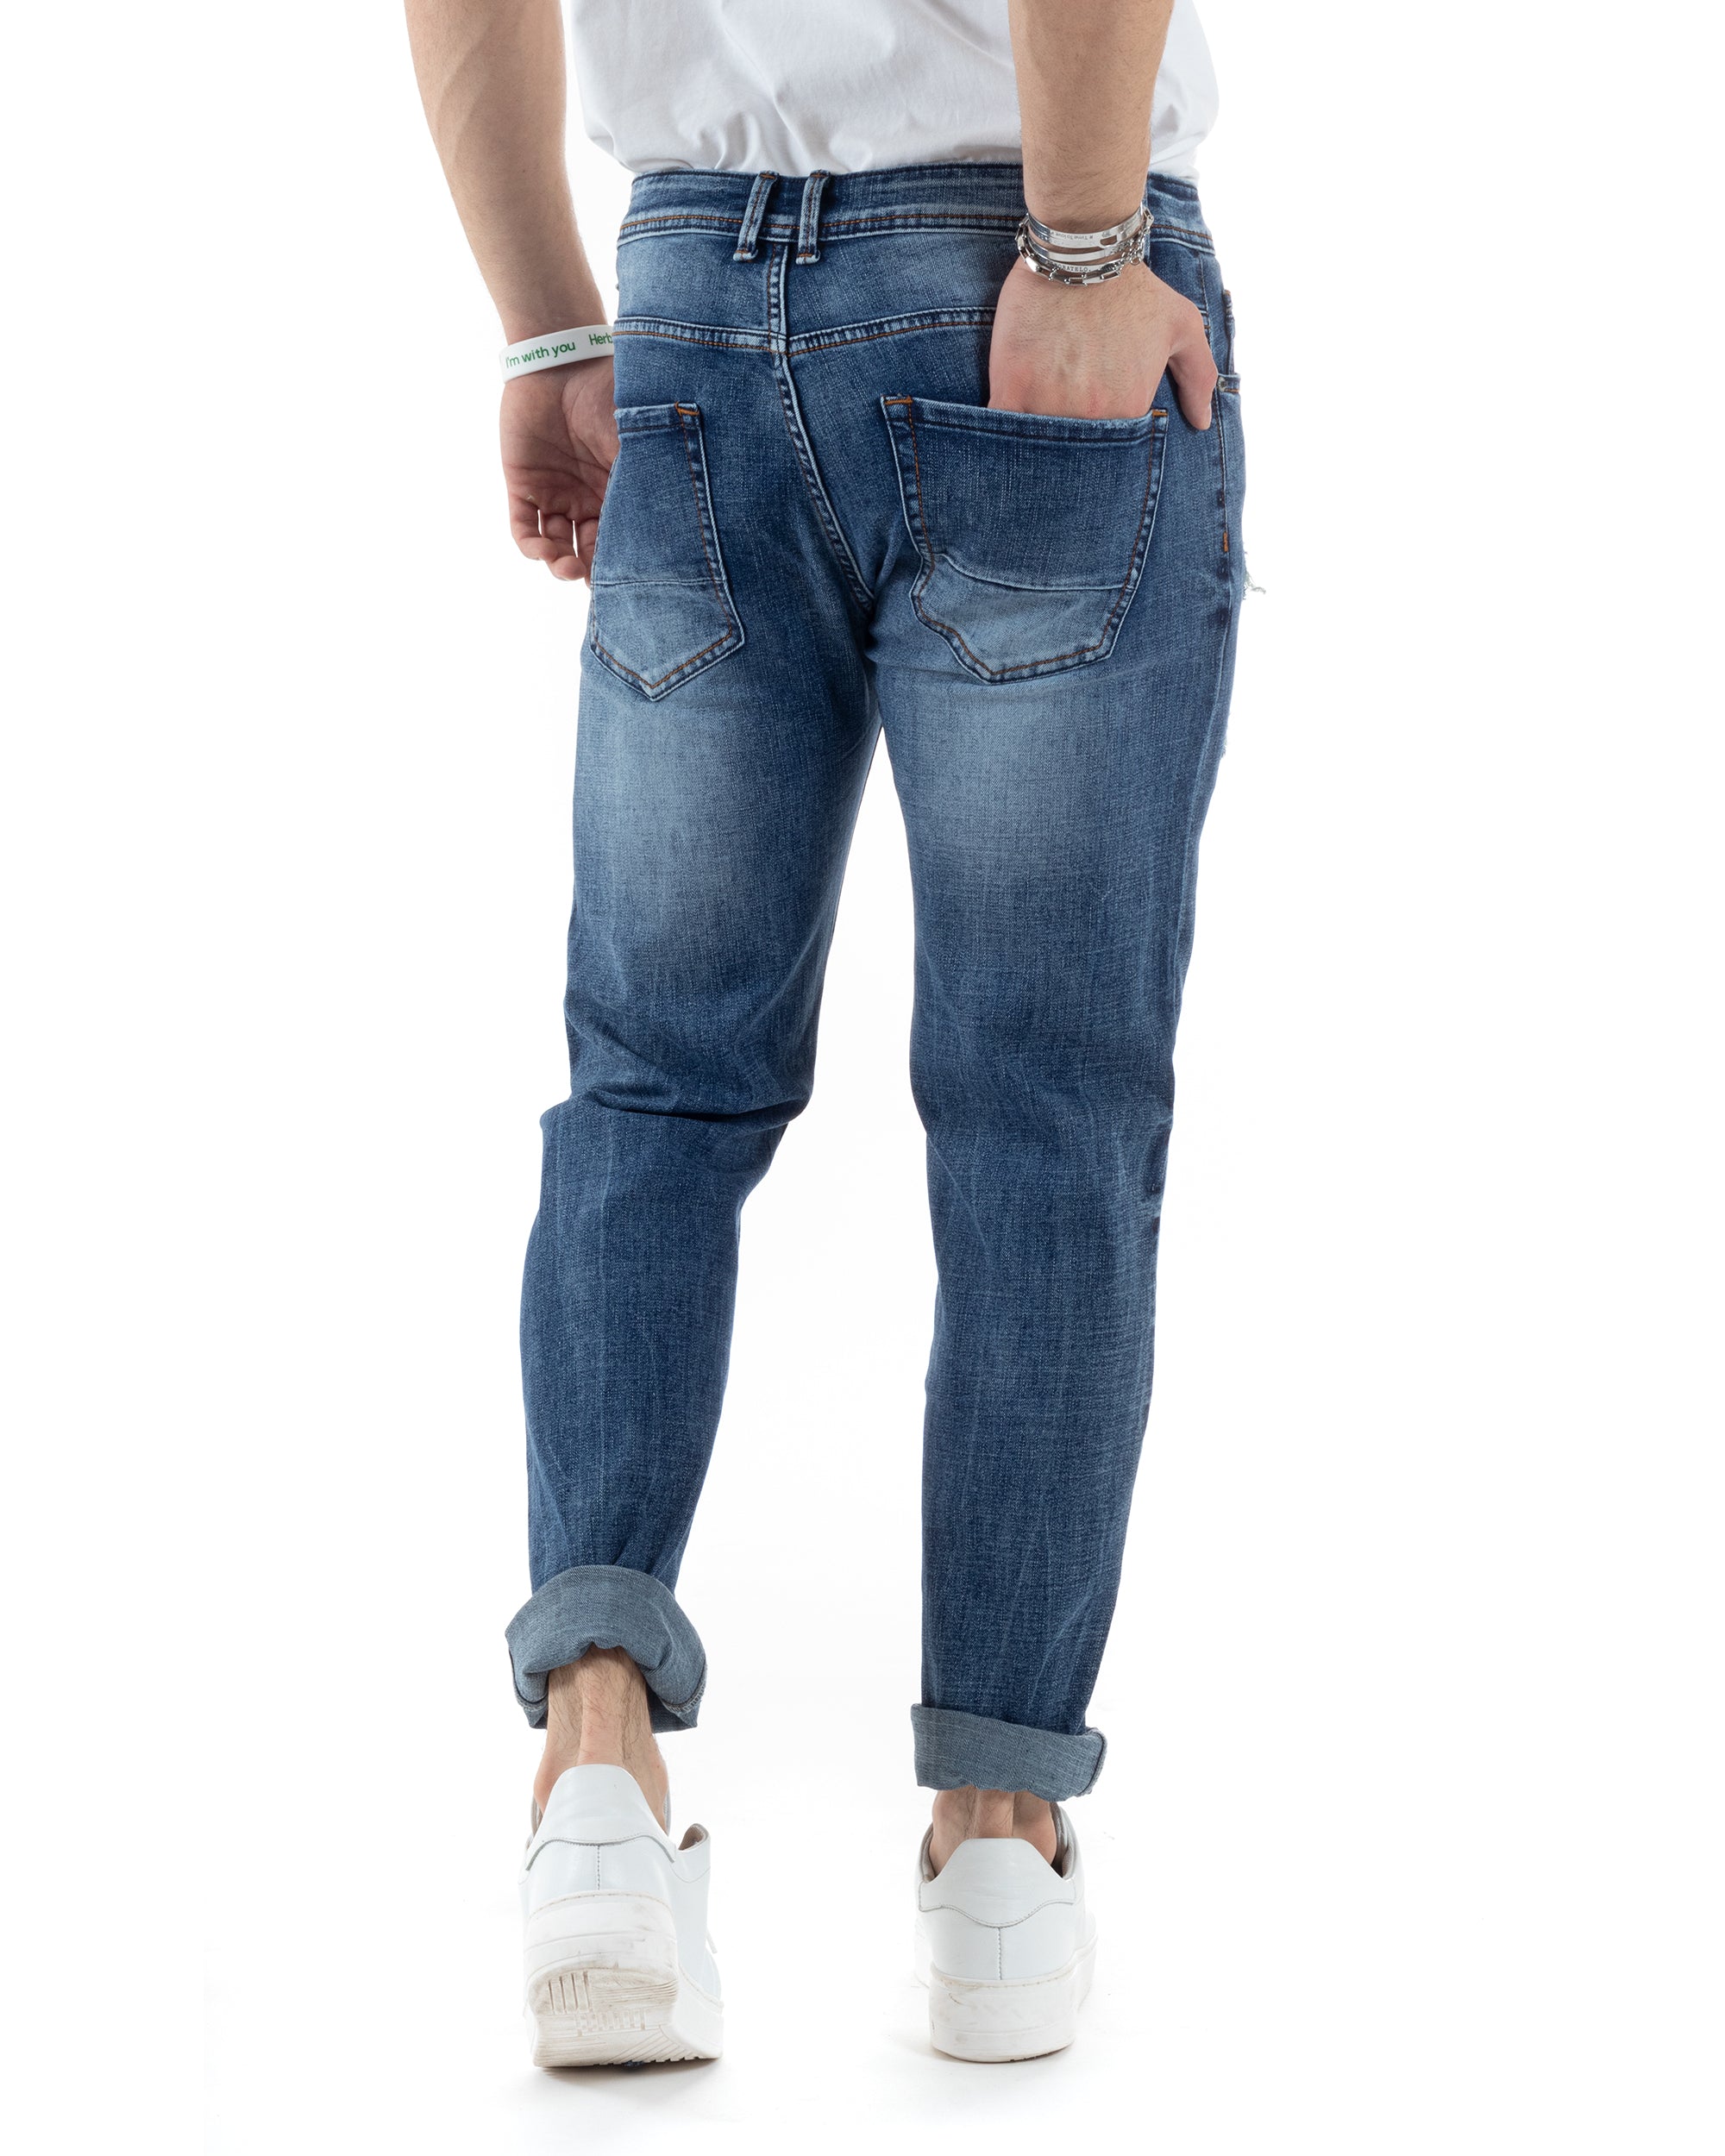 Pantaloni Uomo Jeans Con Rotture Cinque Tasche Slim Fit Blu Denim Stone Washed GIOSAL-JS1011A